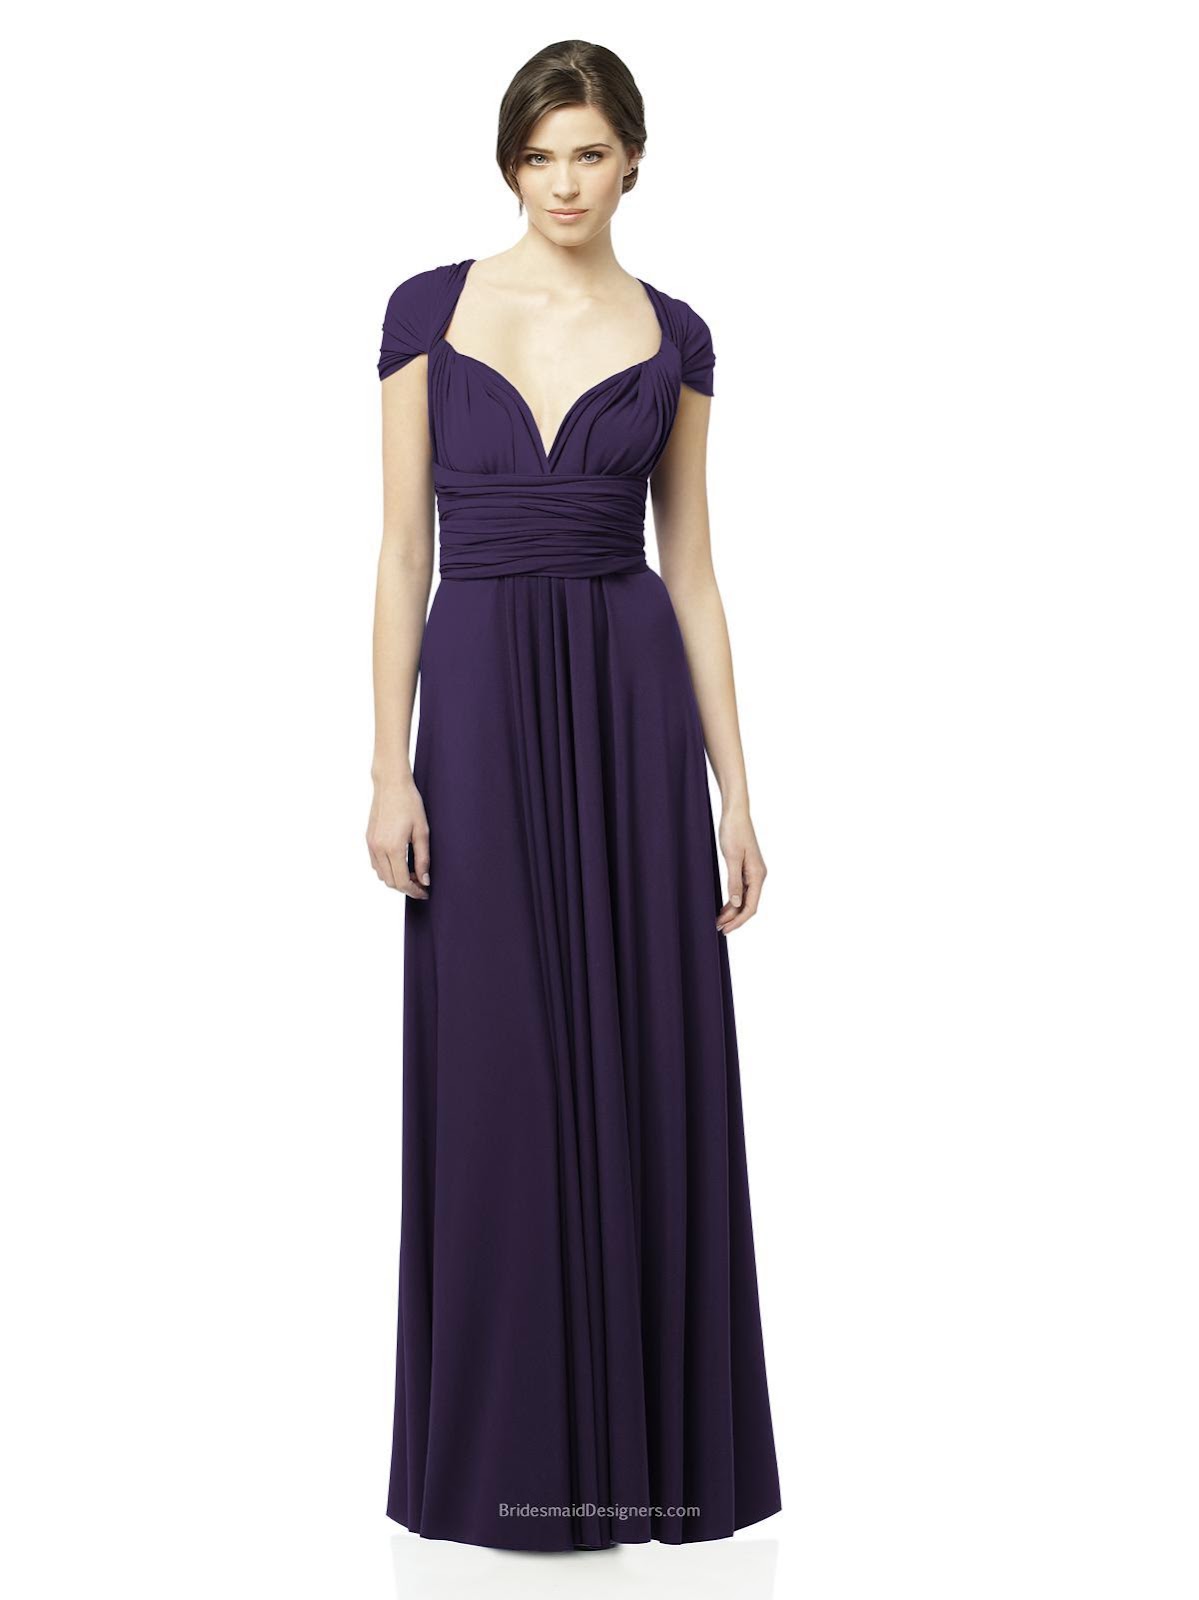 impression-purple-empire-twist-wrap-floor-length-formal-dress-with-ciss-cross-back-1.jpg